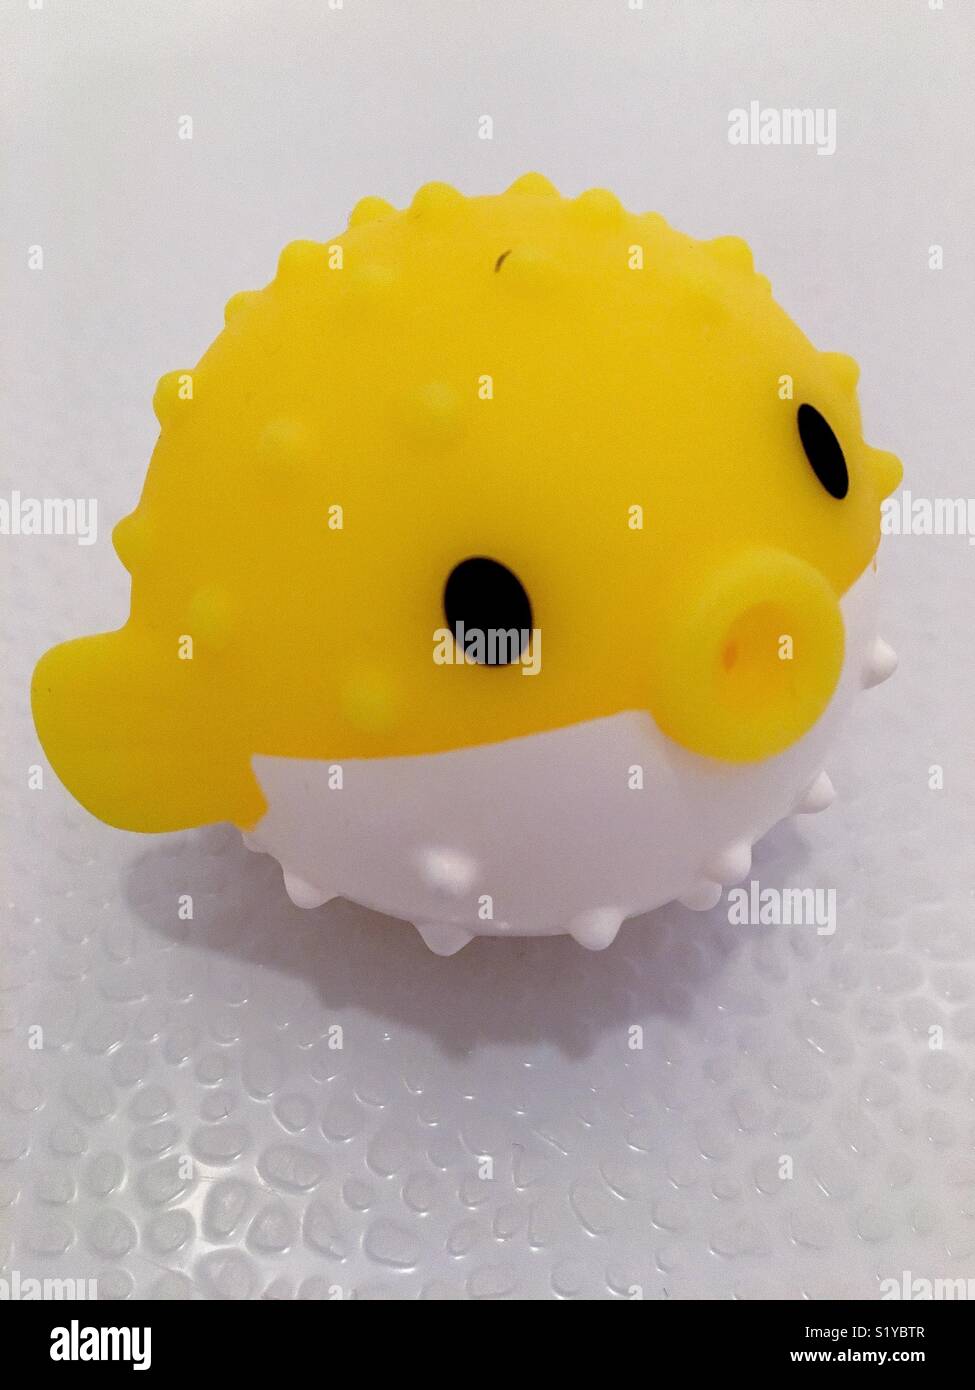 Yellow rubber puffer fish in bath tub. Stock Photo